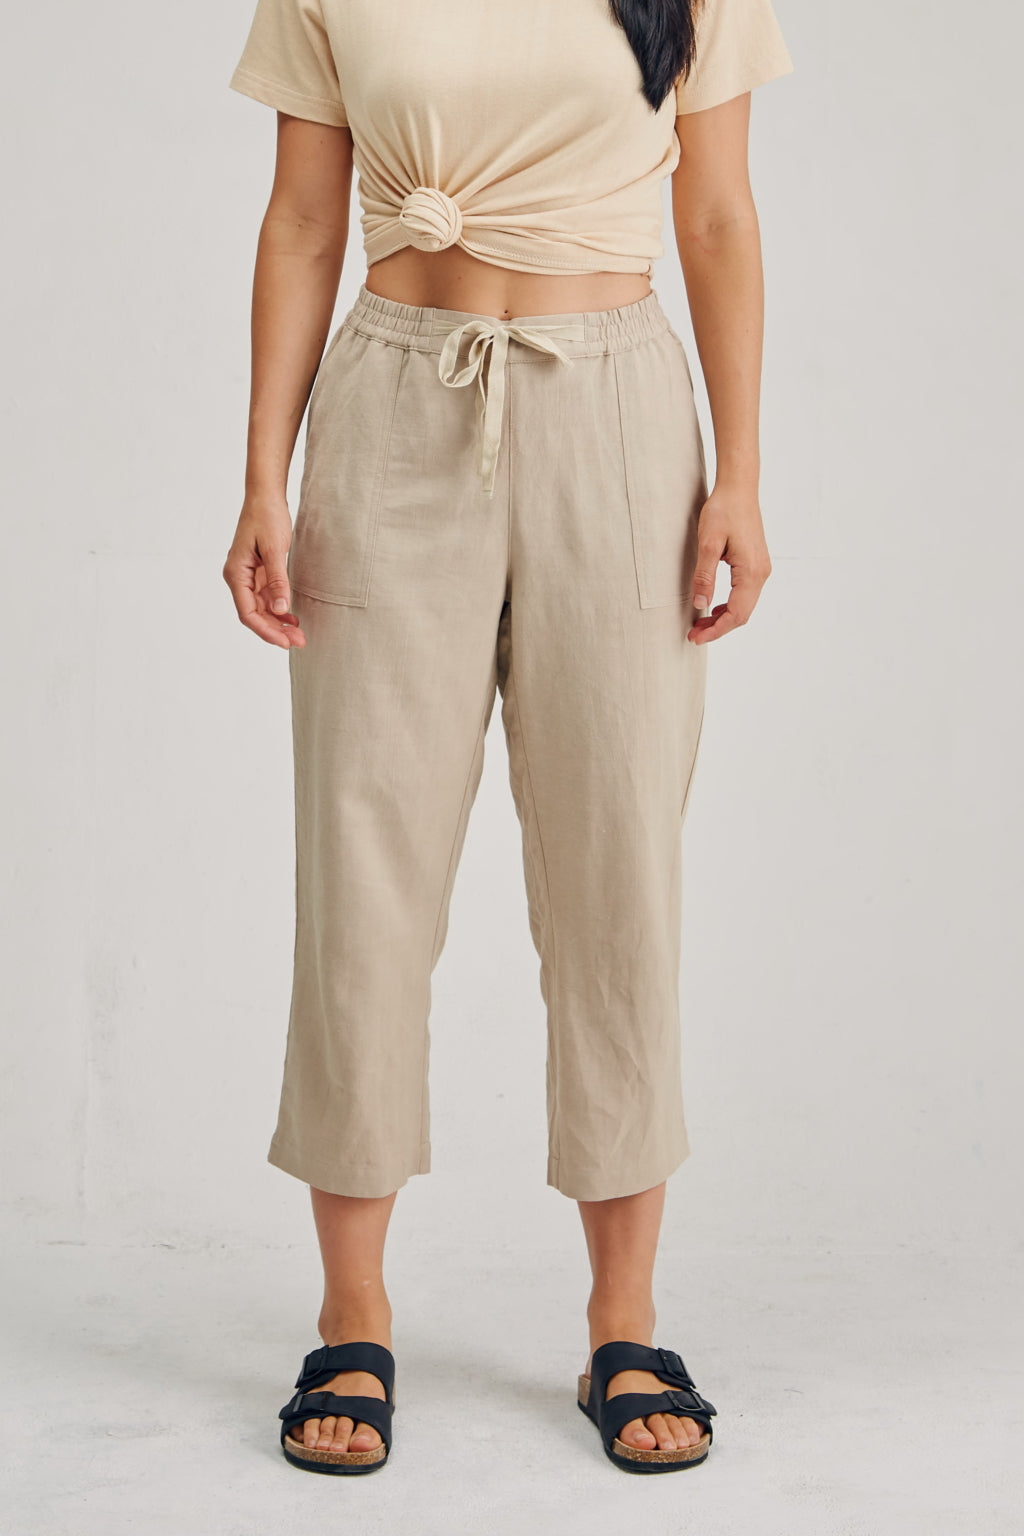 Ladies’ Hemp Cotton 7/8 Elastic Waist Pants | Oat - HempStitch.